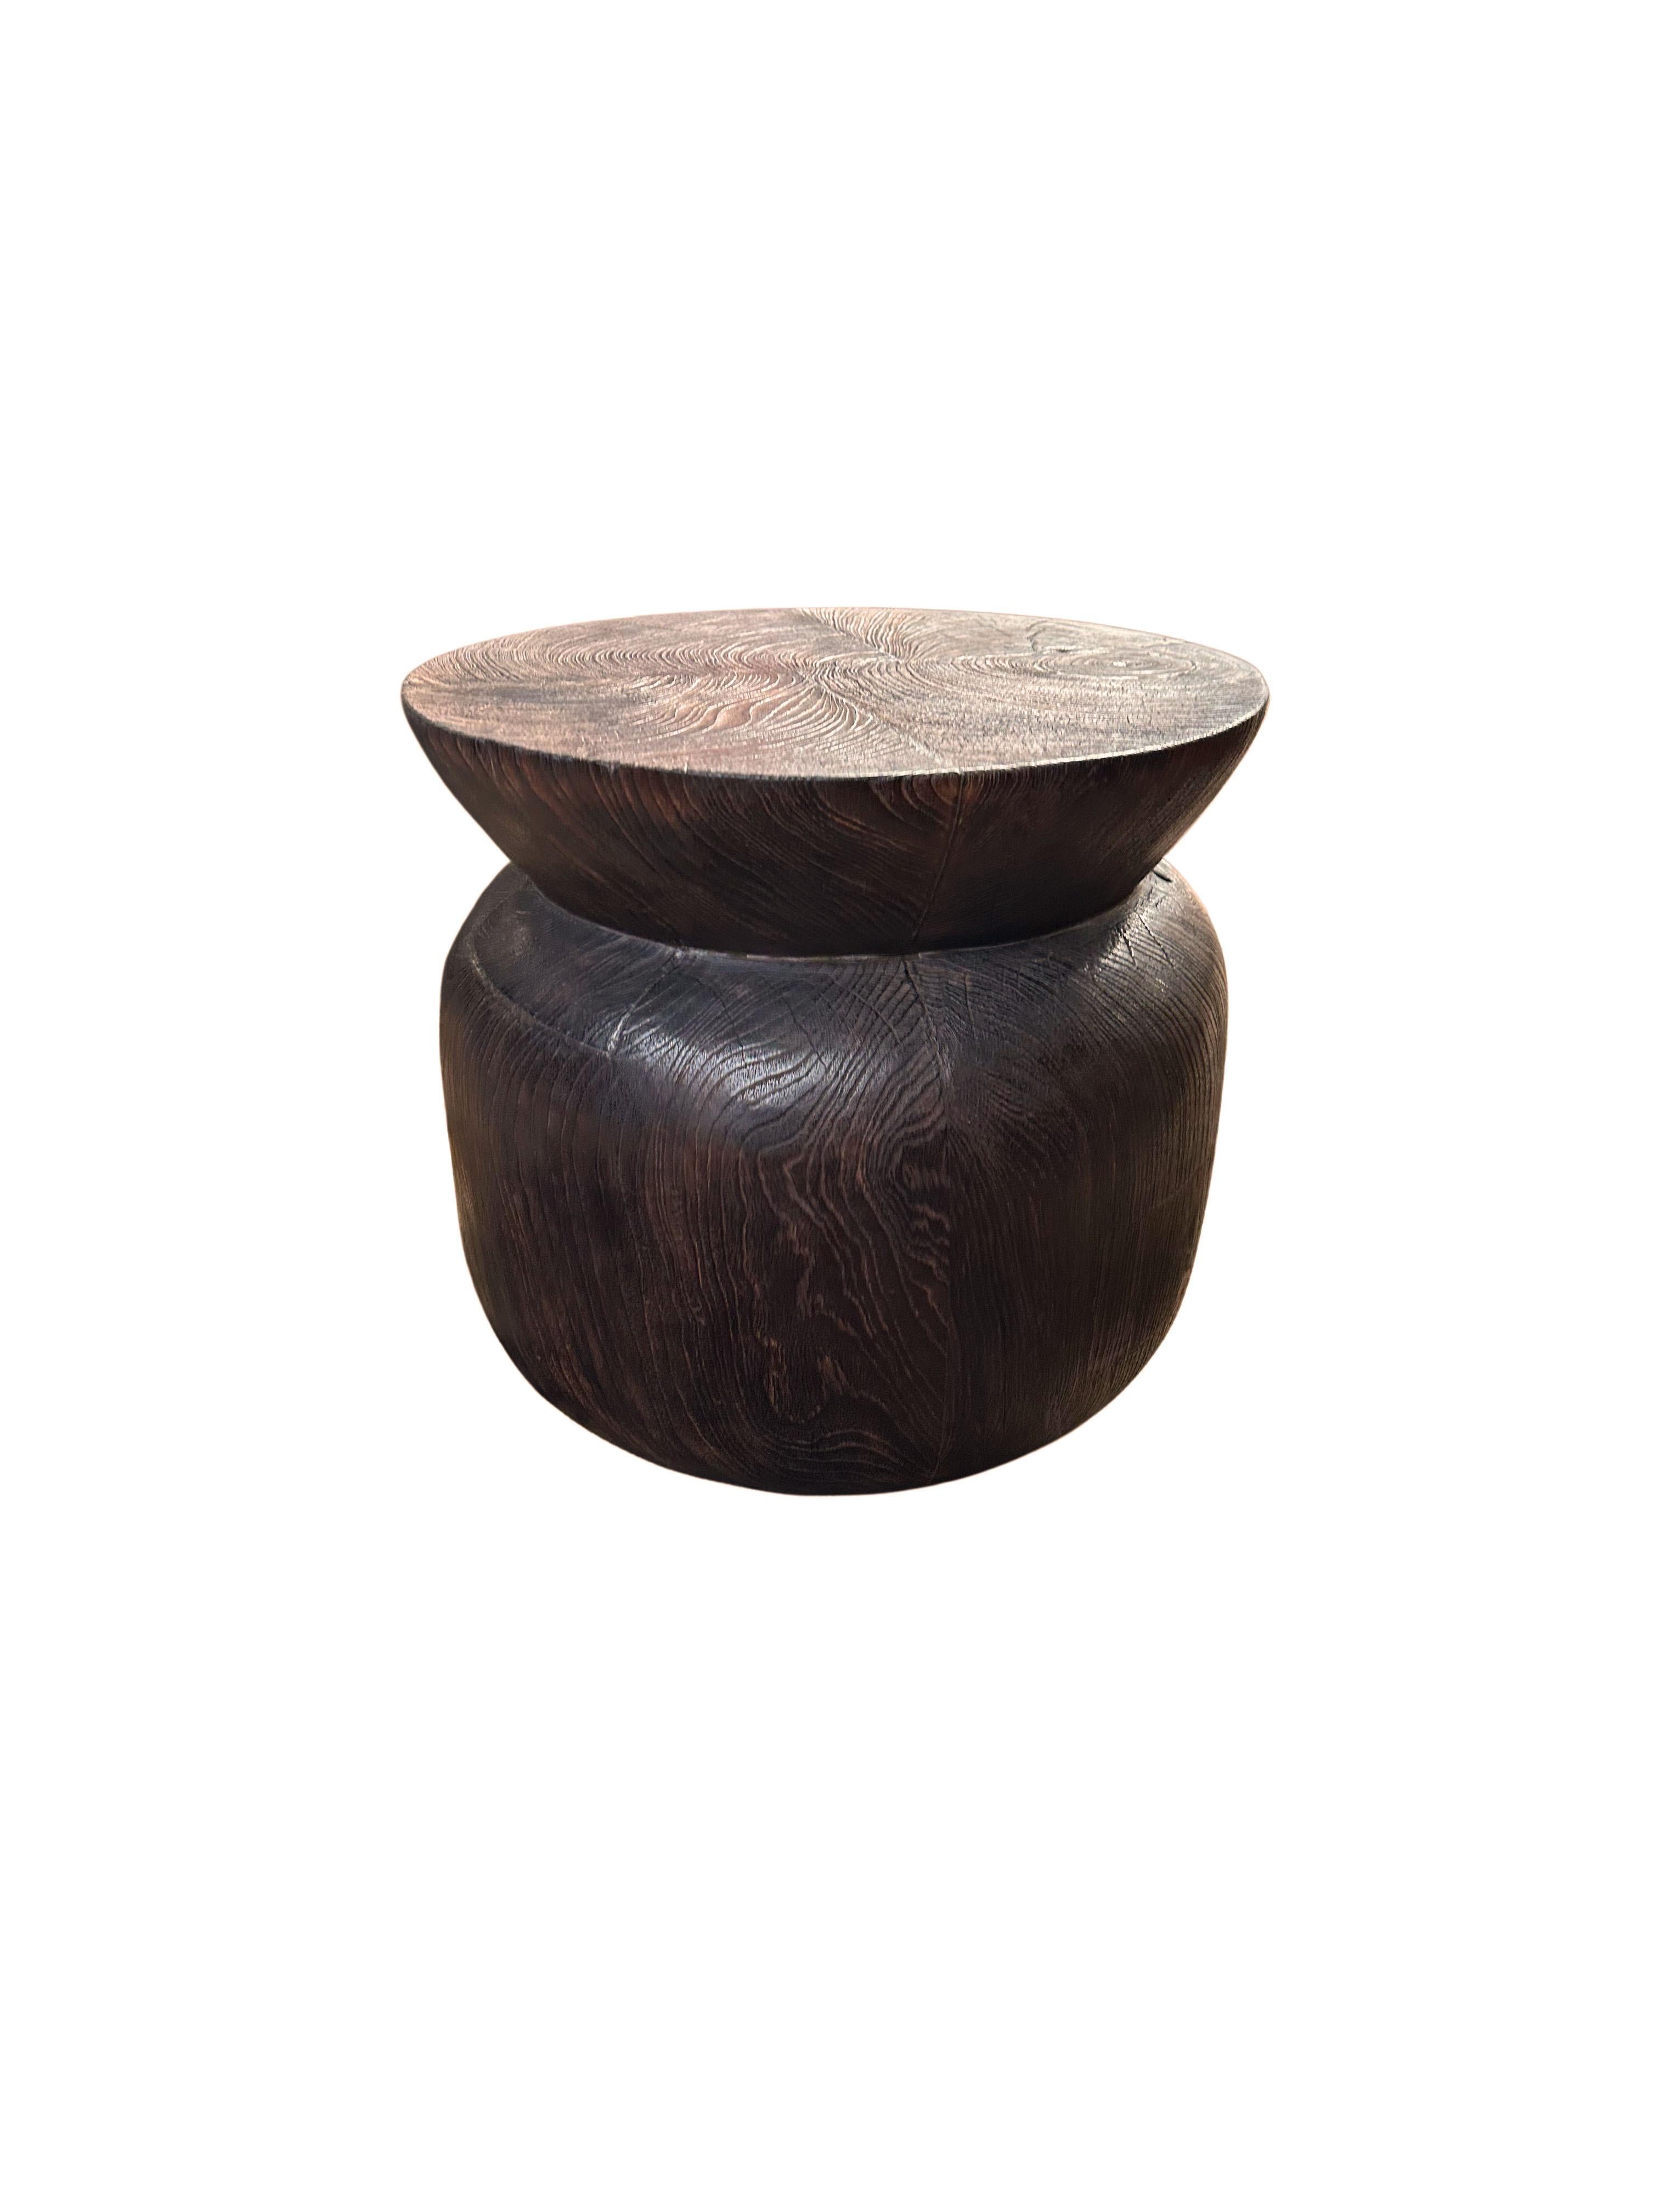 Organic Modern Sculptural Round Teak Wood Side Table, Burnt Finish, Modern Organic For Sale